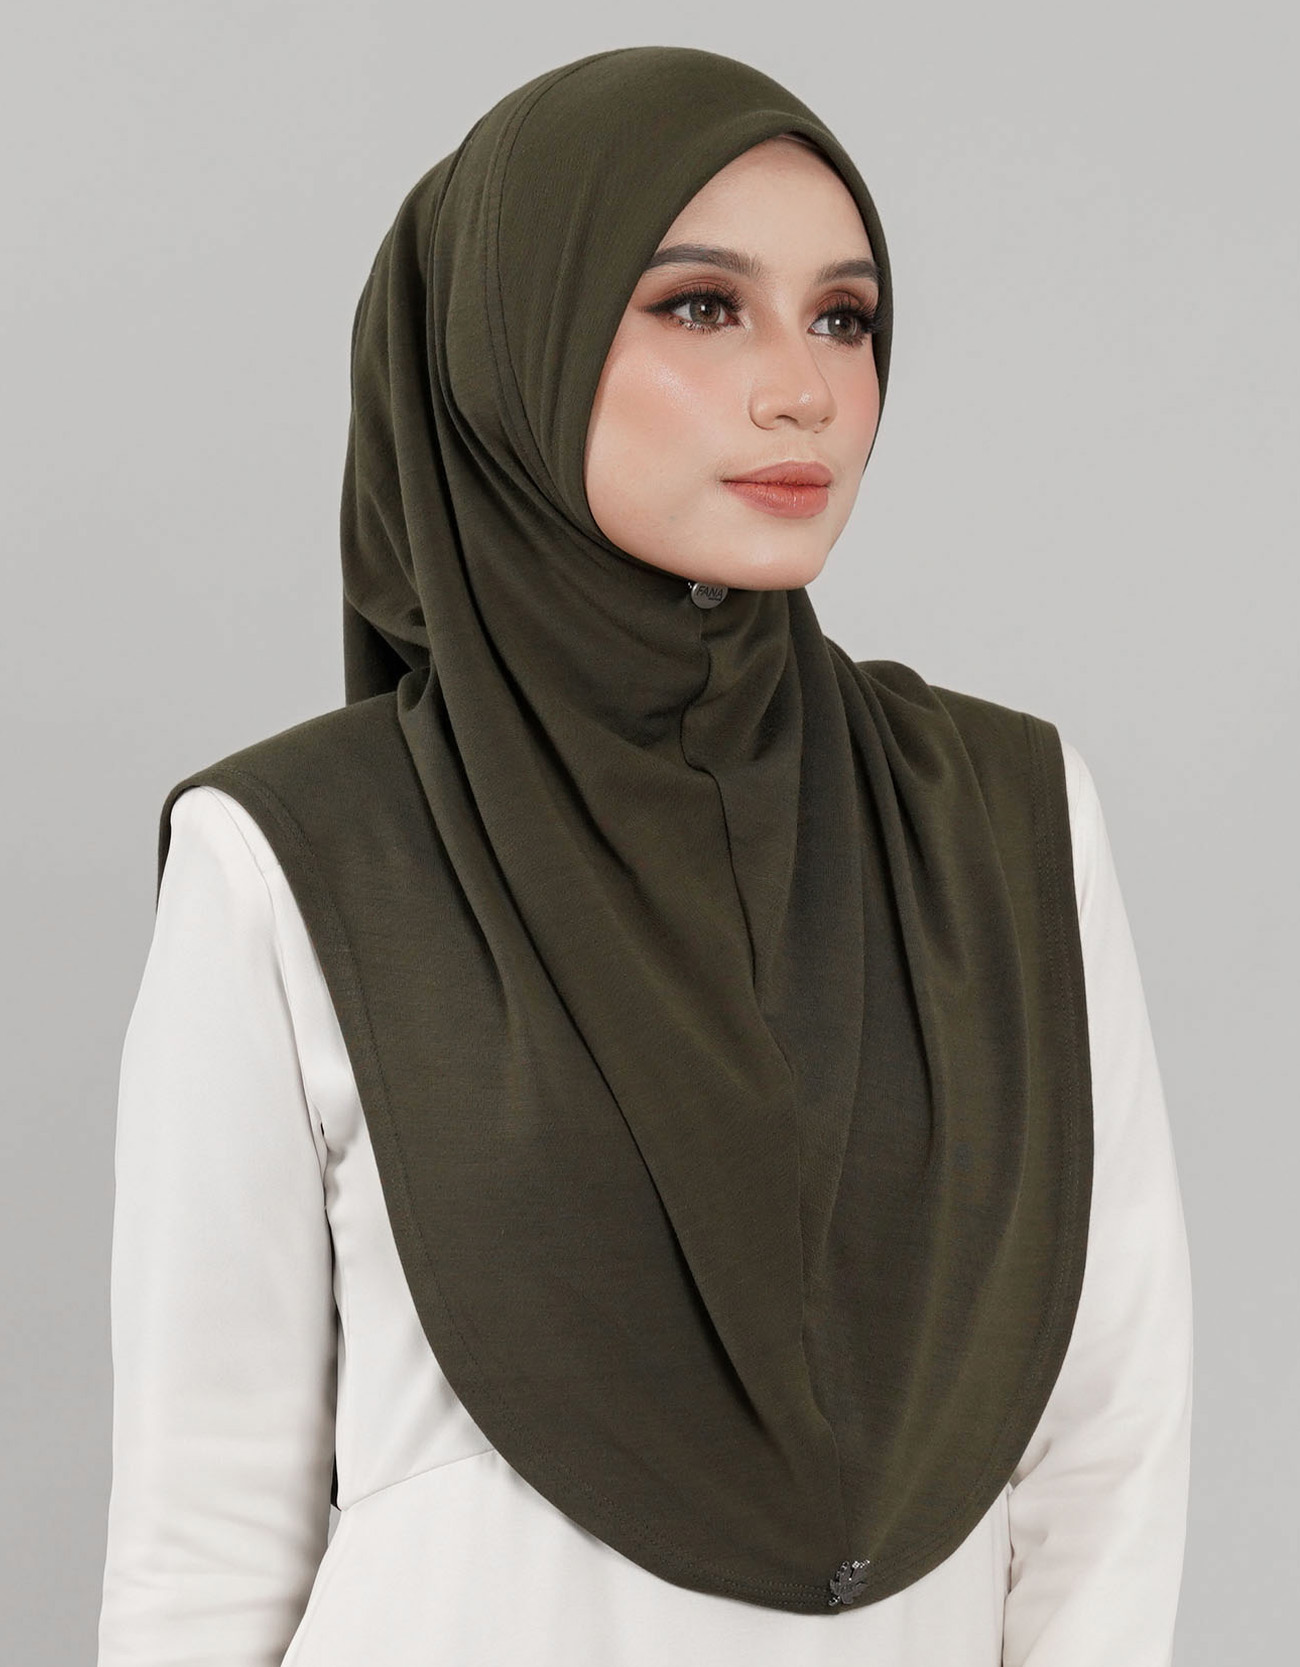 Express Hijab Damia Plain - 09 Seaweed